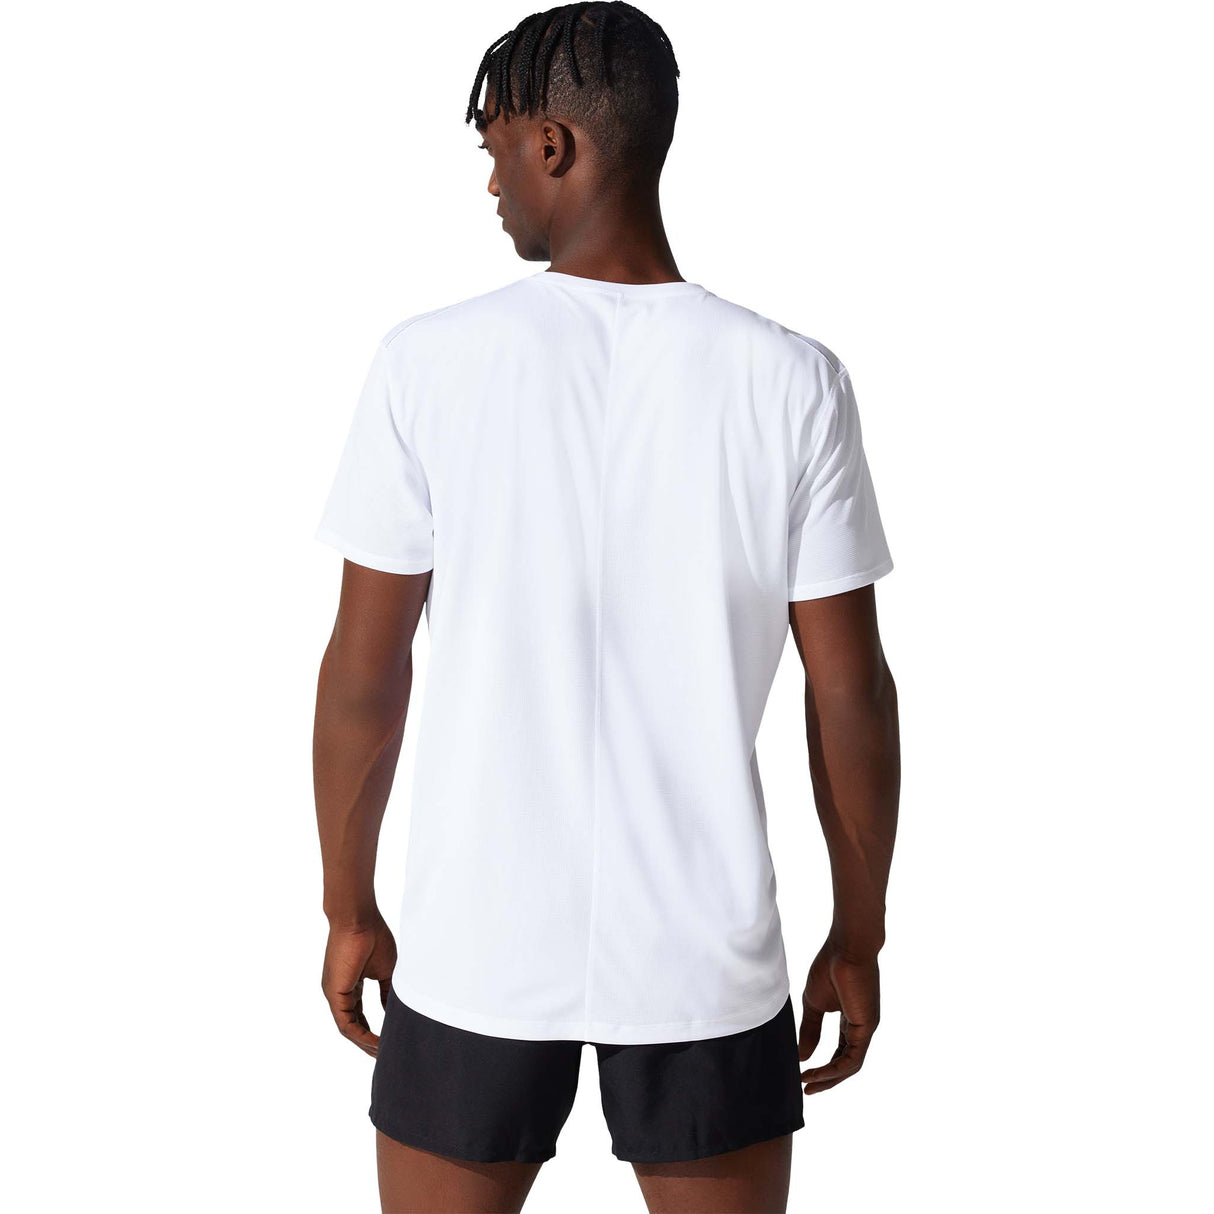 ASICS Silver T-shirt de course blanc homme dos